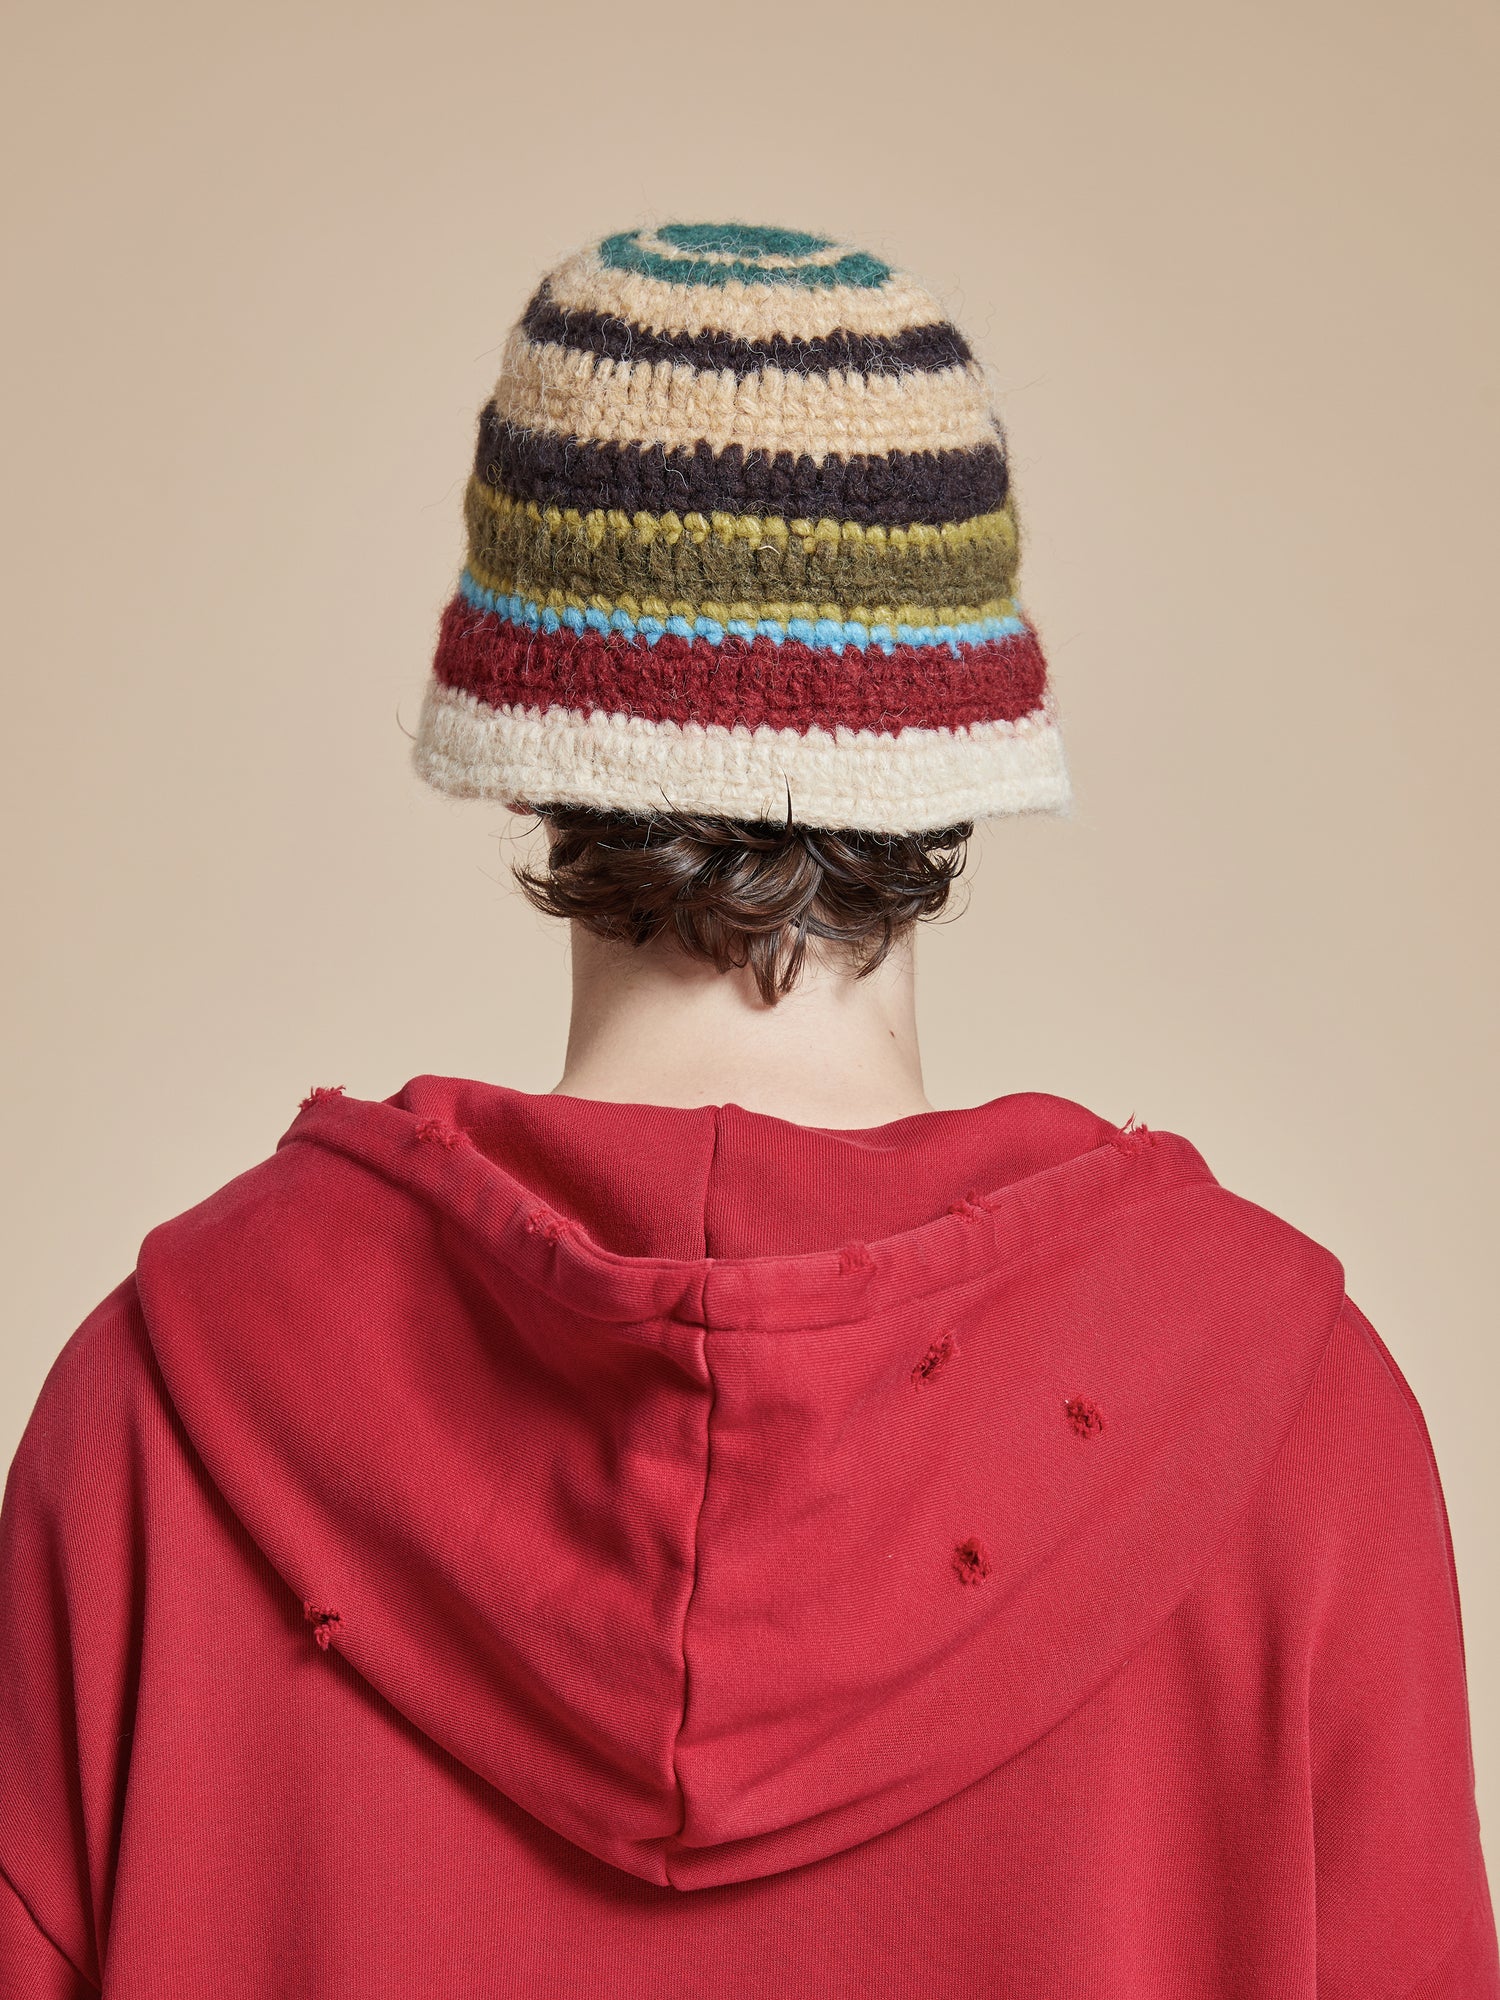 A man wearing a Found Stripe Knit Beanie hat.